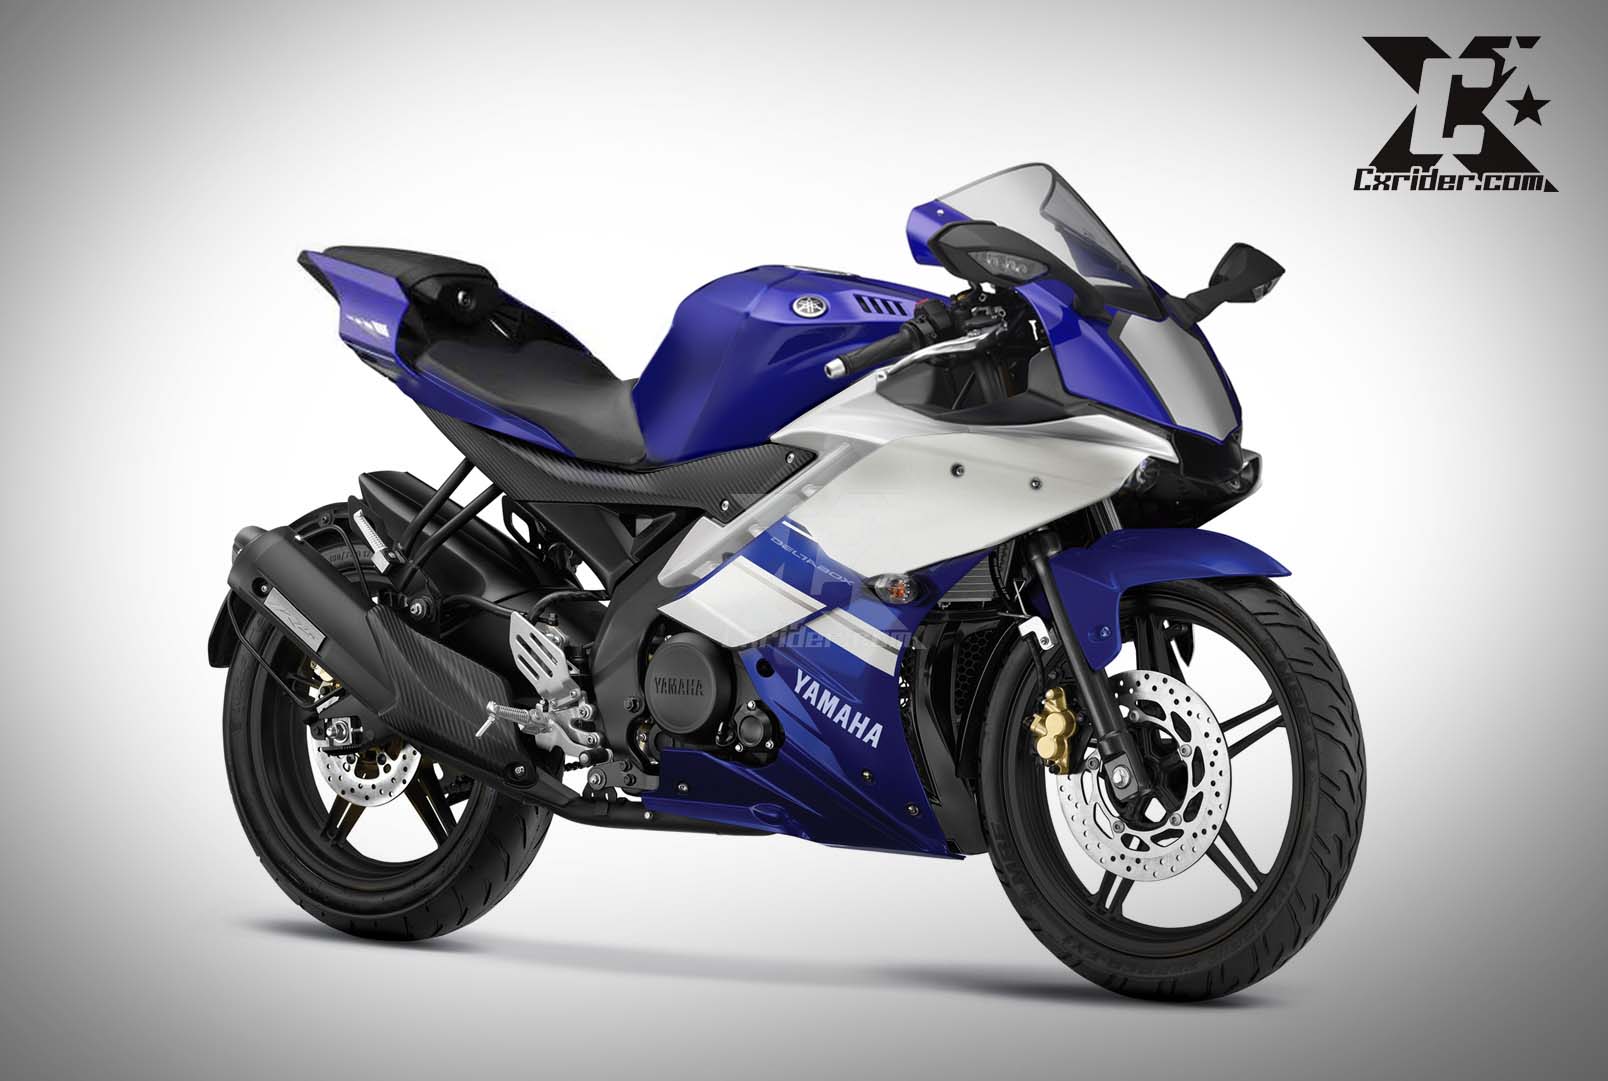 Konsep modifikasi Yamaha R15 bodykit yamaha R1 2015 